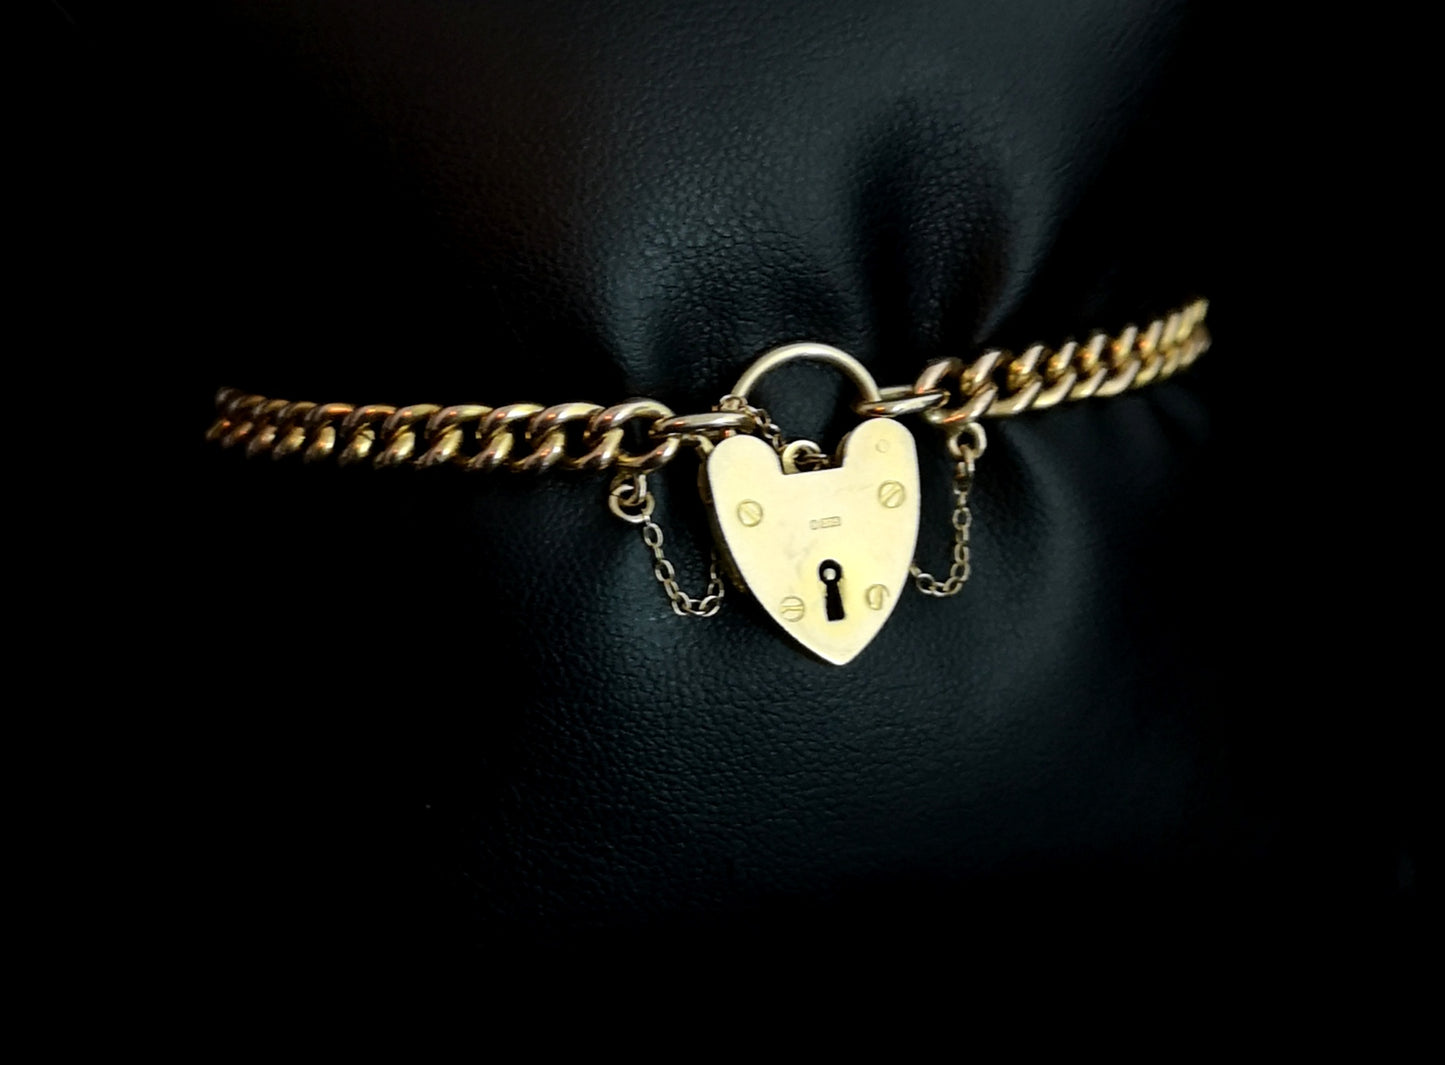 Antique 9ct gold curb link bracelet, heart padlock clasp